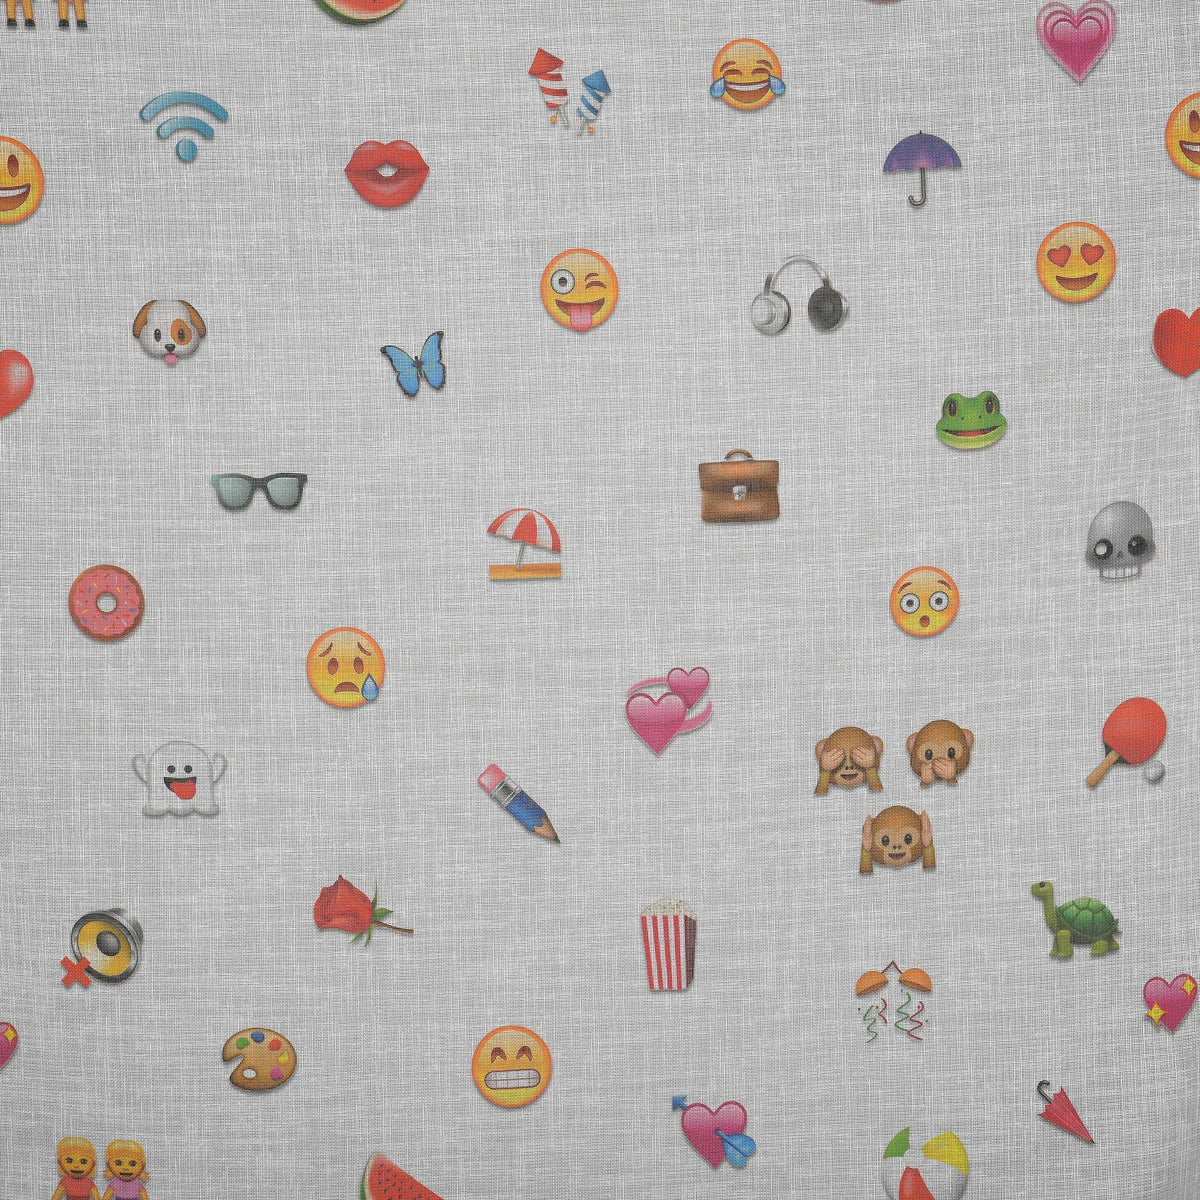 Day curtain colorful emoji